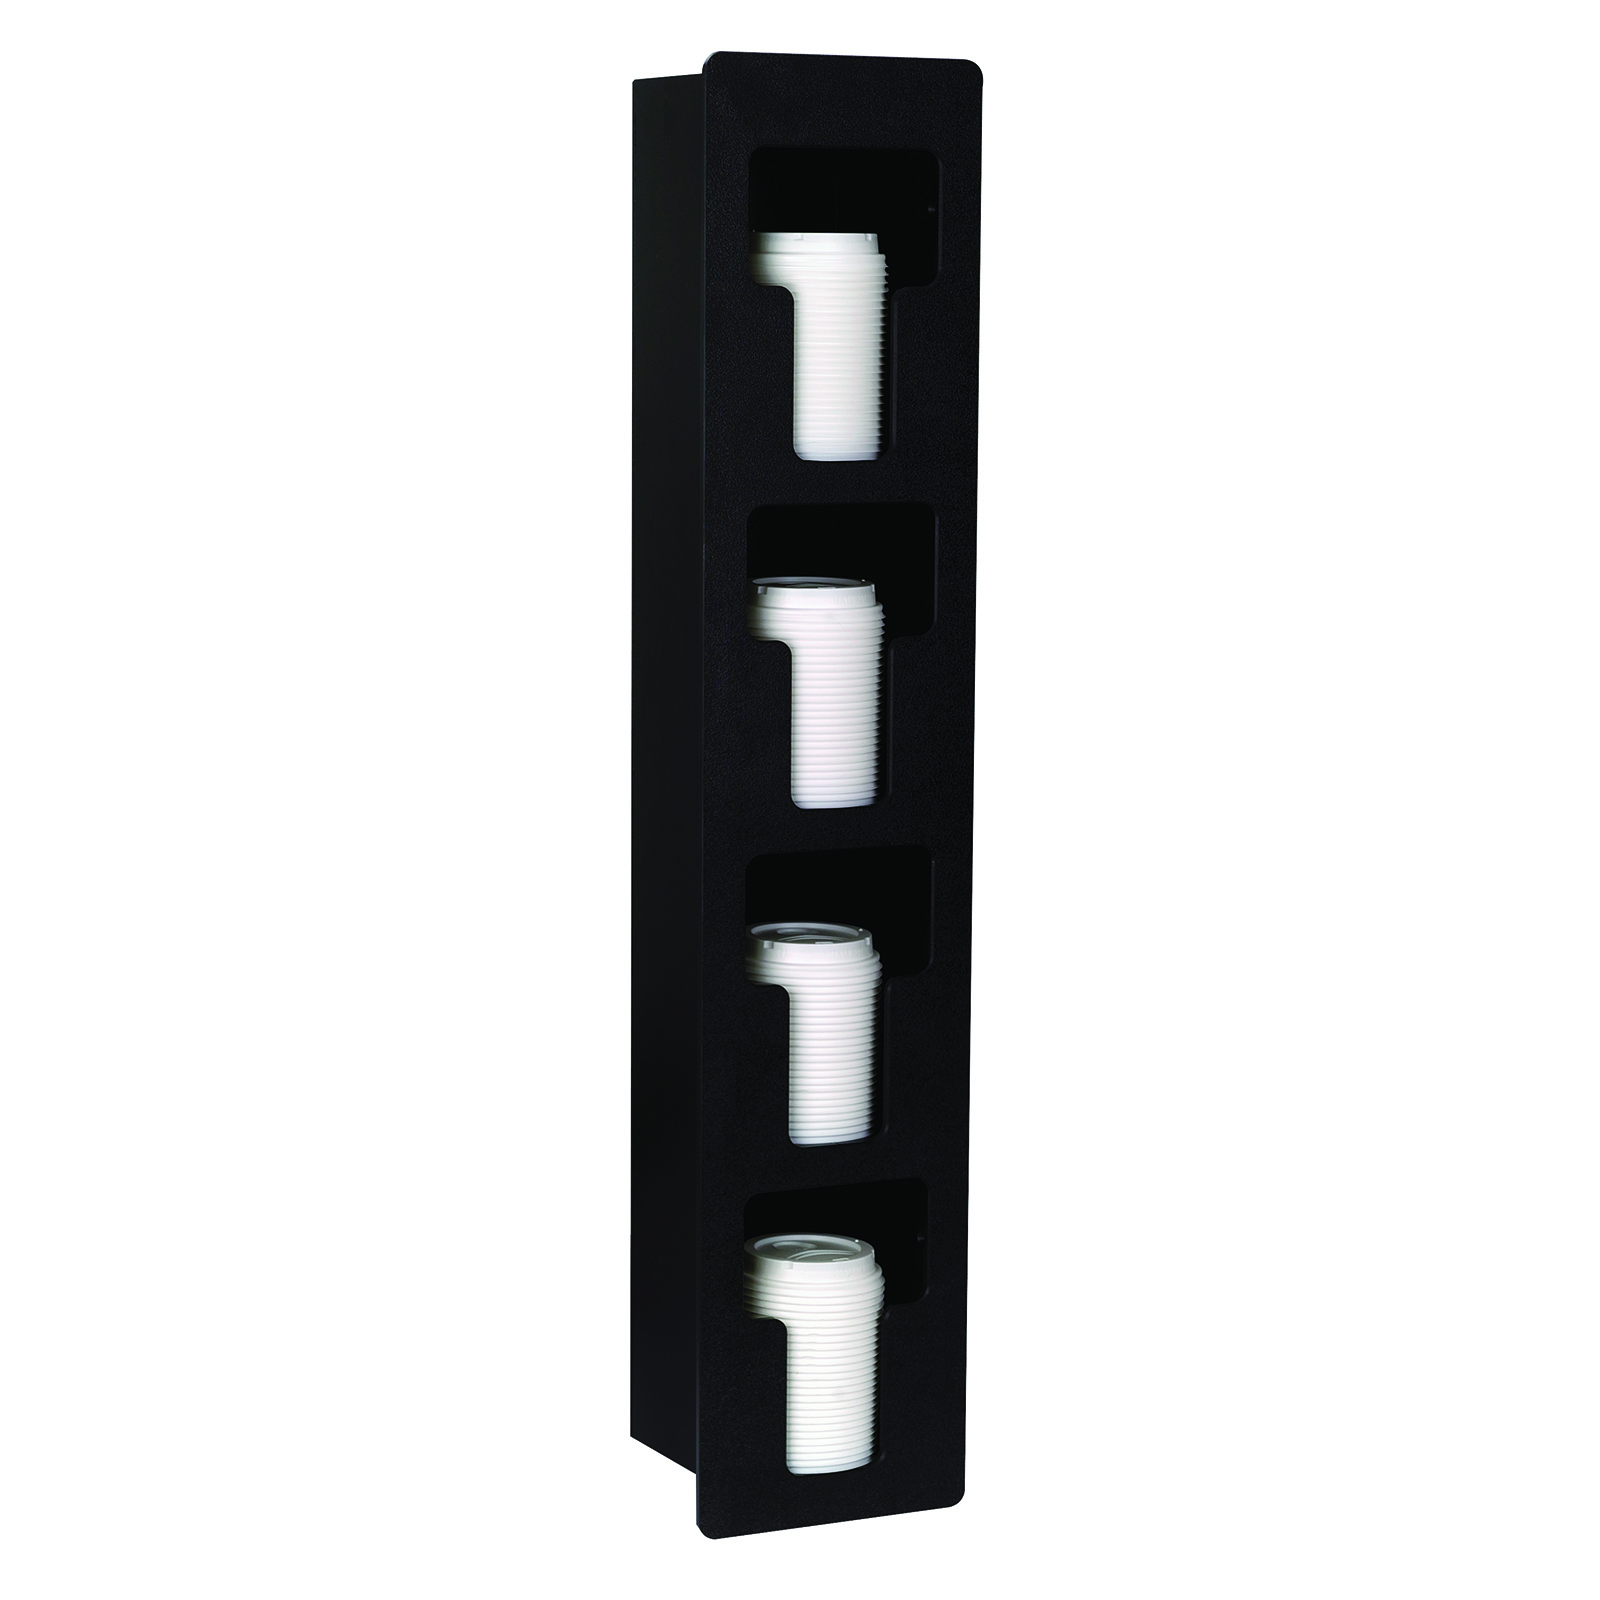 Dispense-Rite FMVL-4 Lid Dispenser, In-Counter